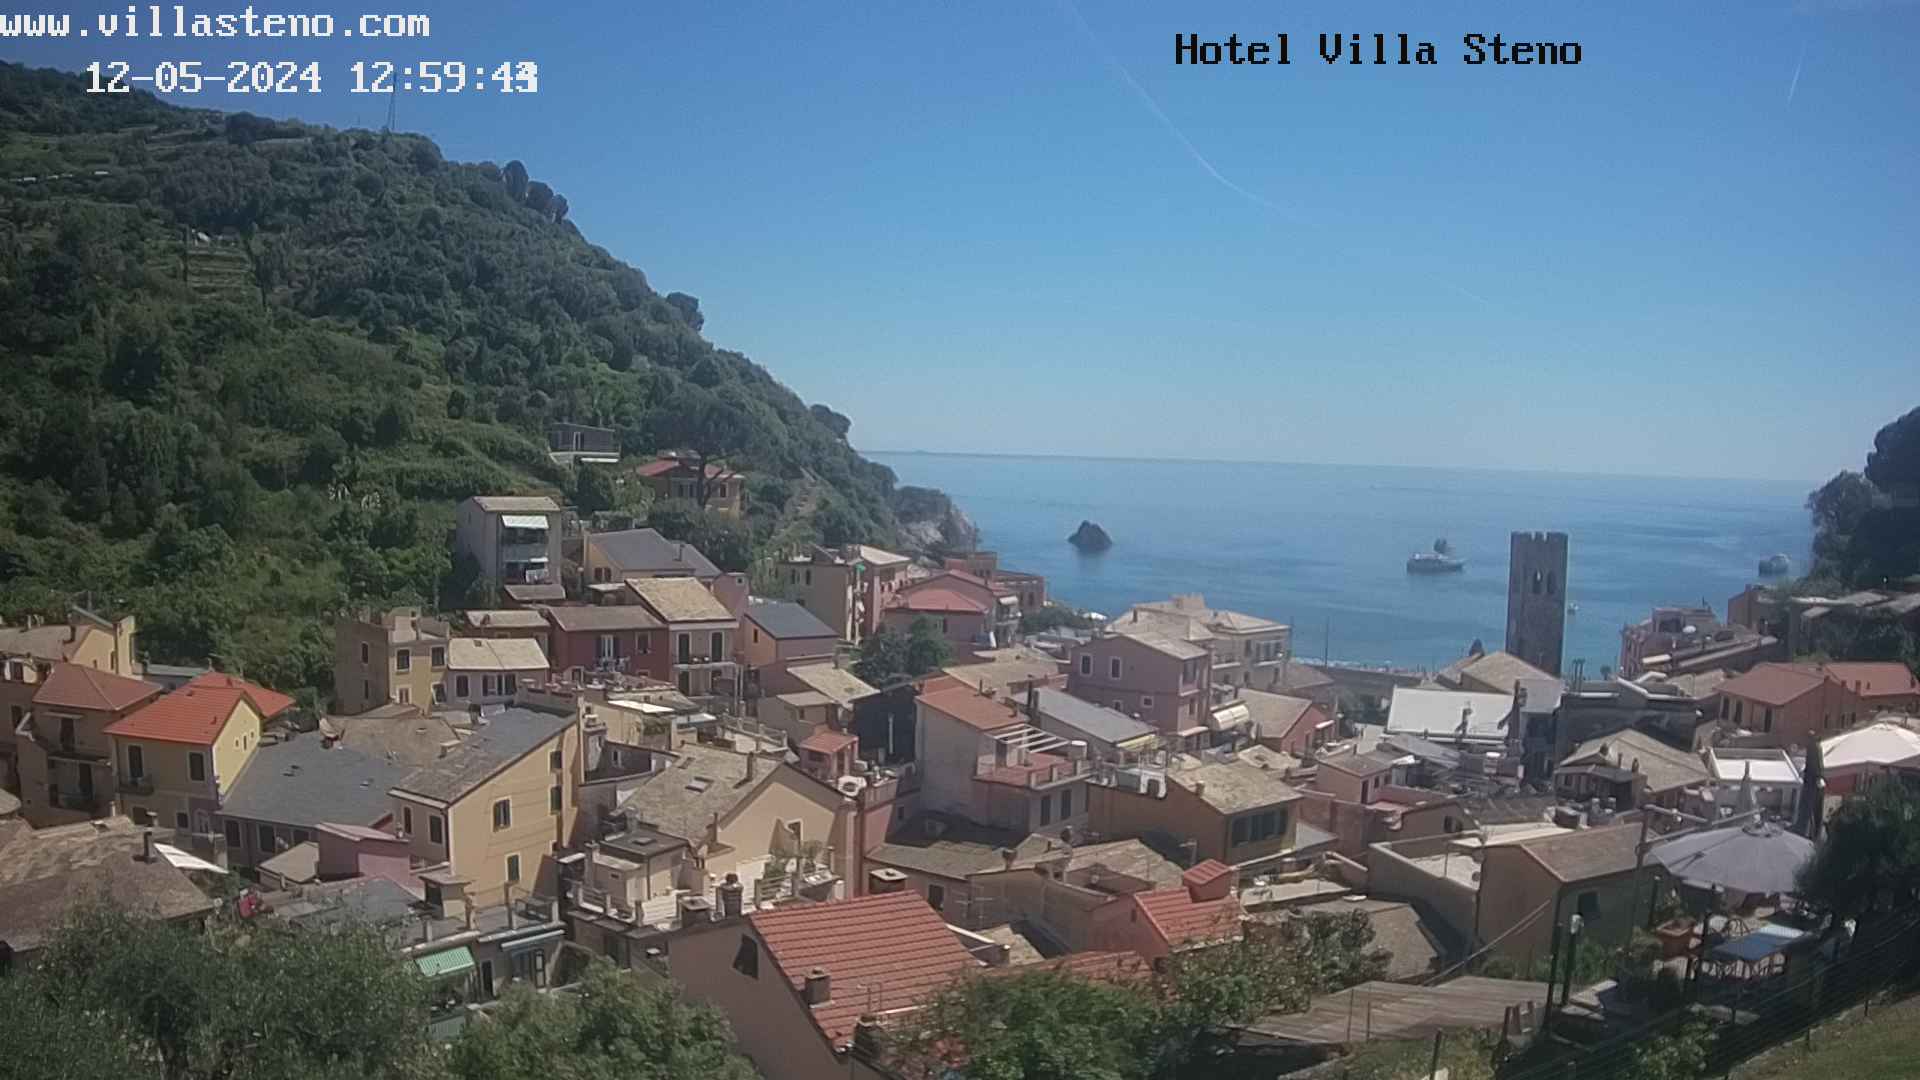 Monterosso al Mare (Cinque Terre) Ve. 14:00